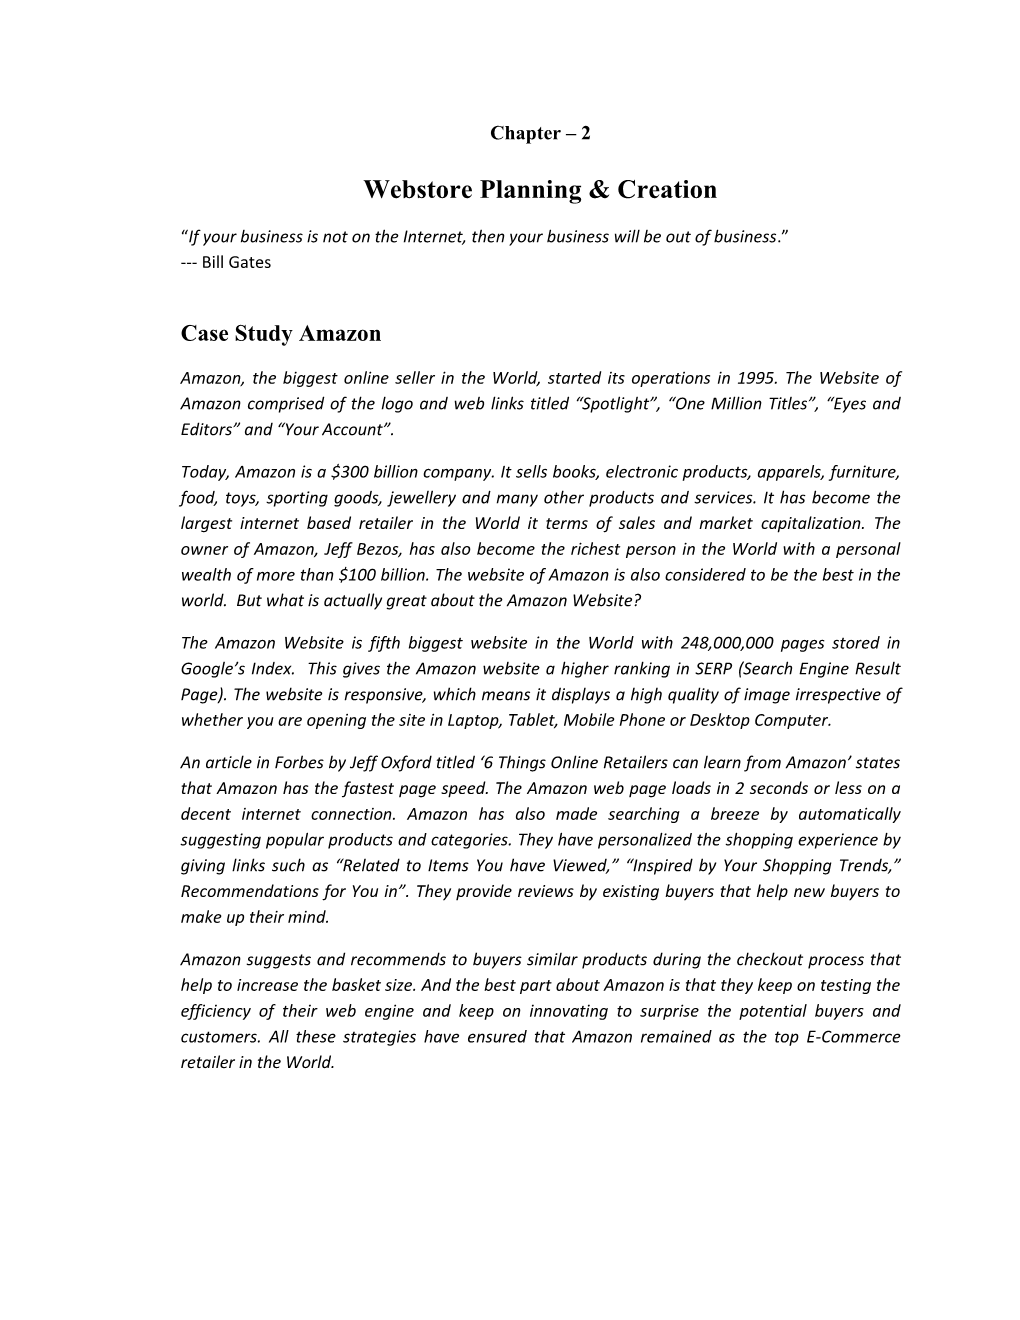 Webstore Planning & Creation